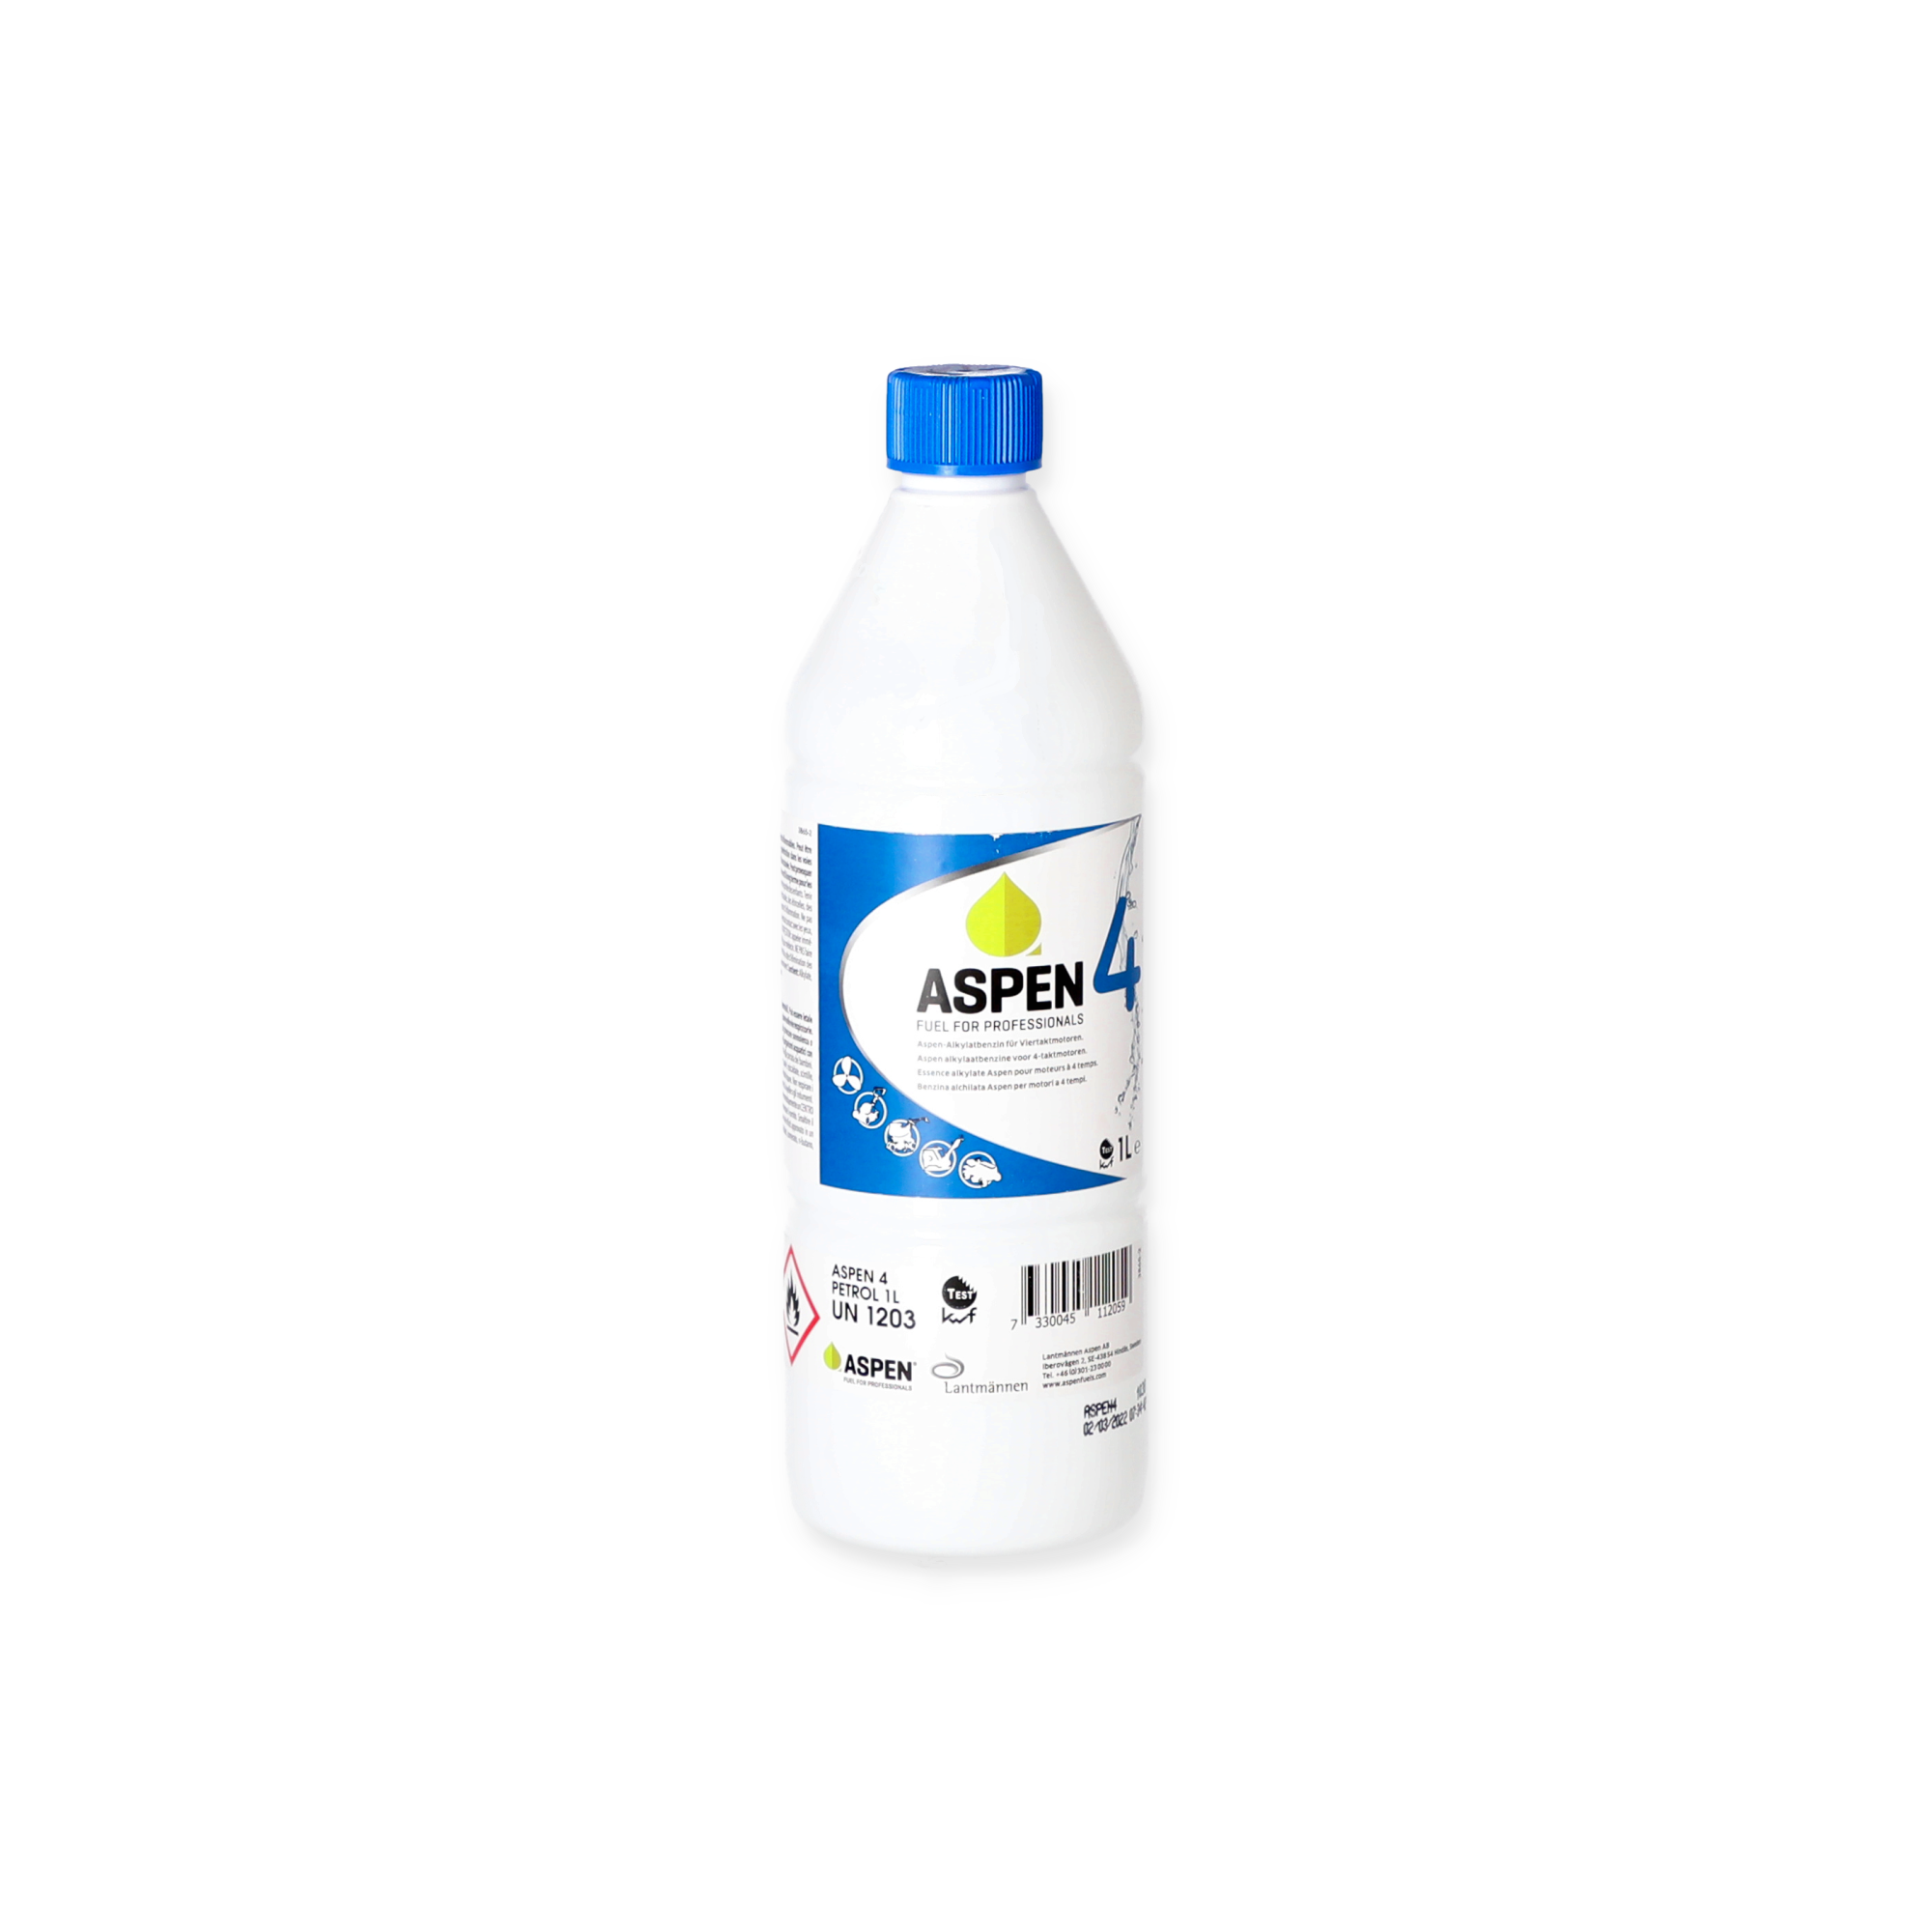 Alkylatbenzin 'Aspen 4' für 4-Takt-Motoren 1 l + product picture